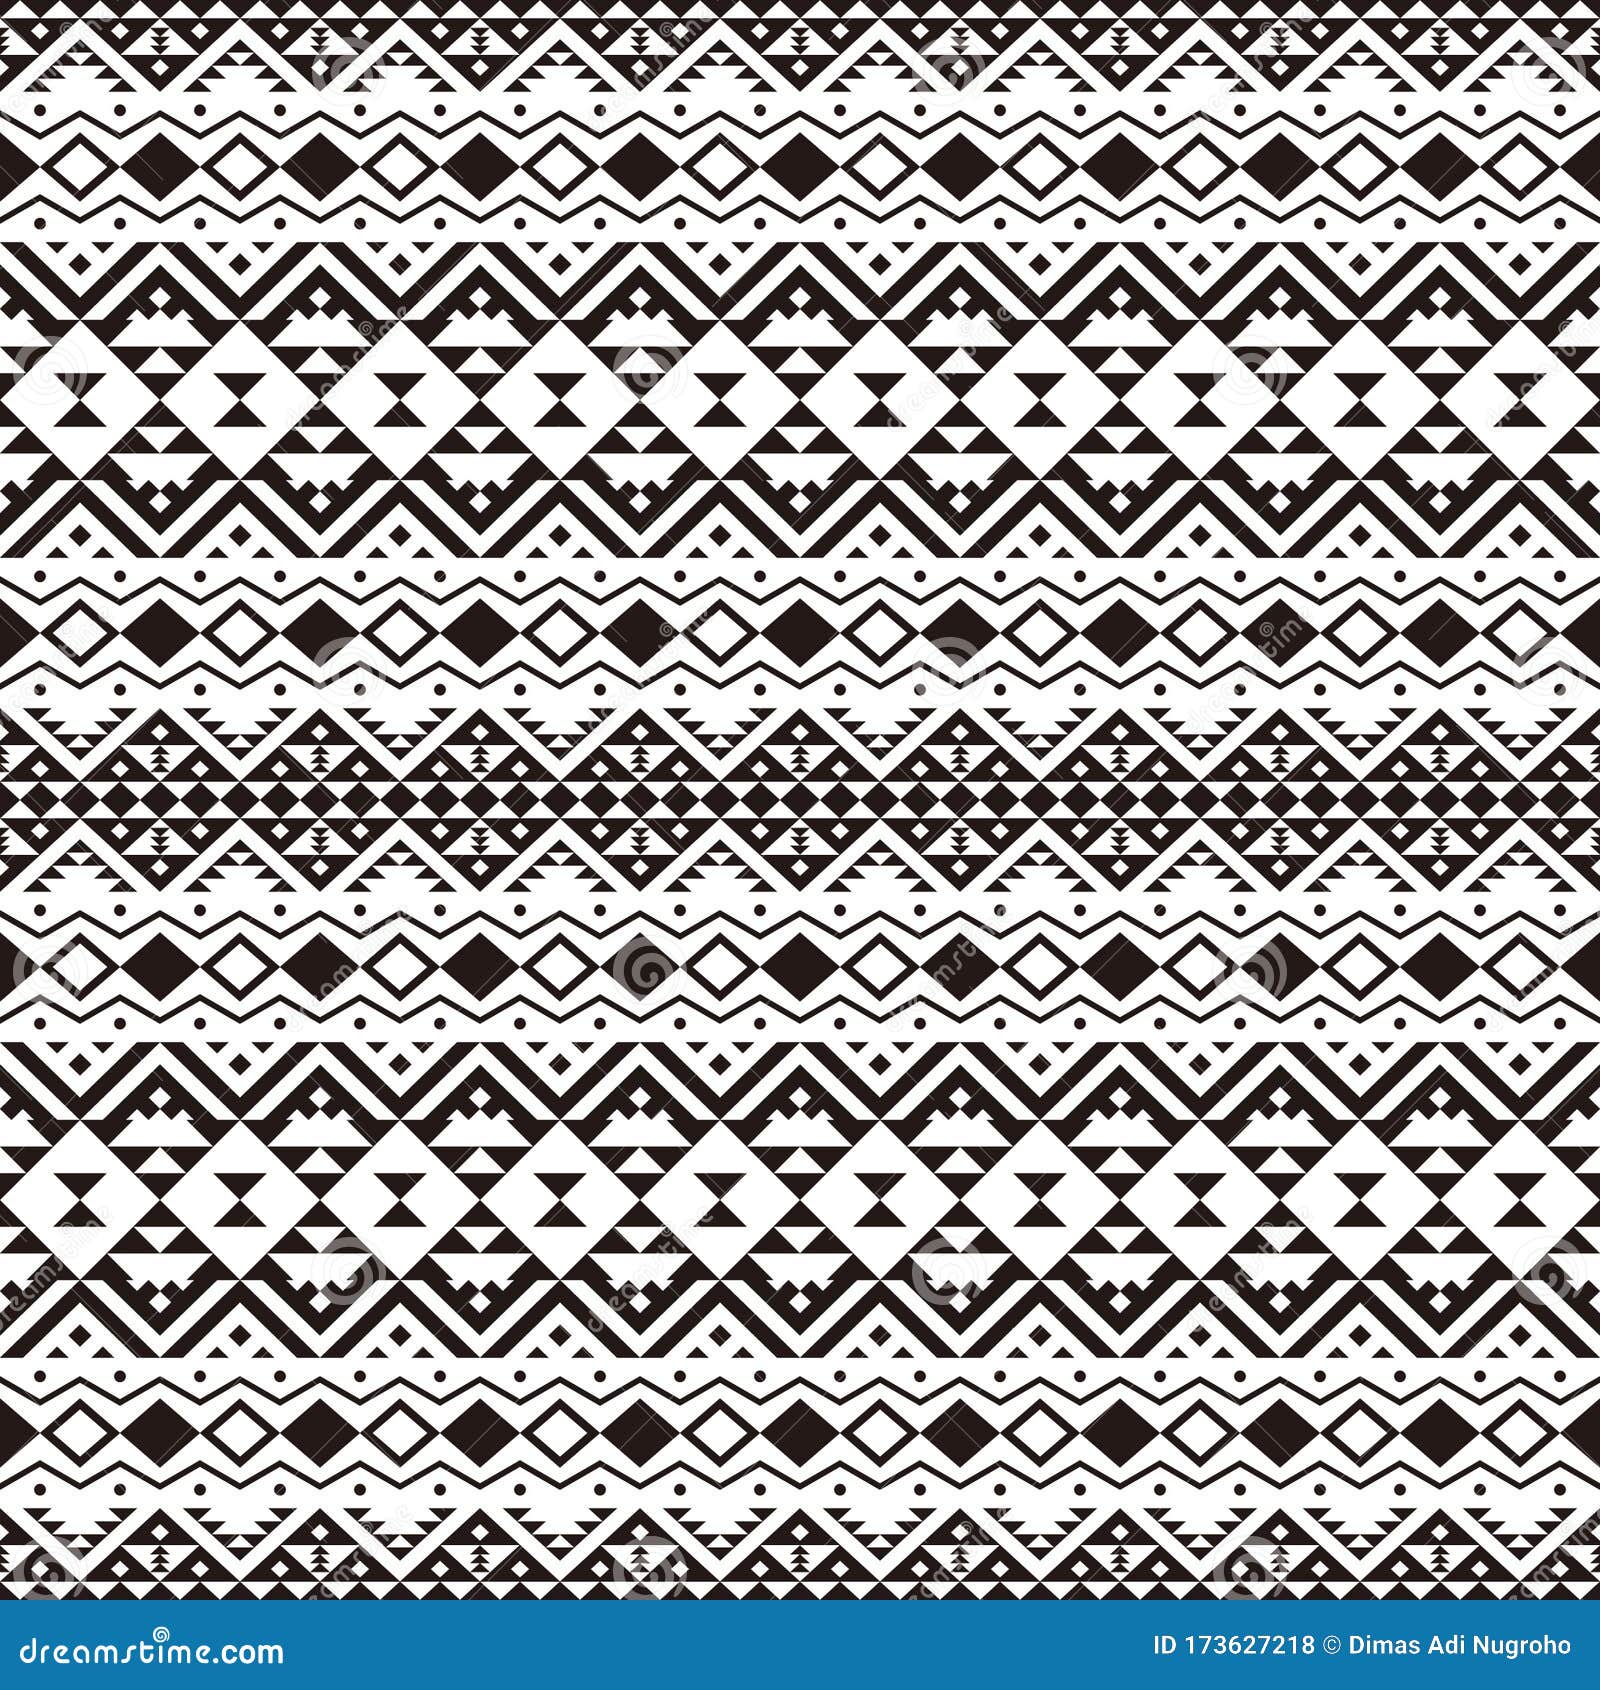 Ikat Aztec Ethnic Seamless Pattern Background Design Stock Vector ...